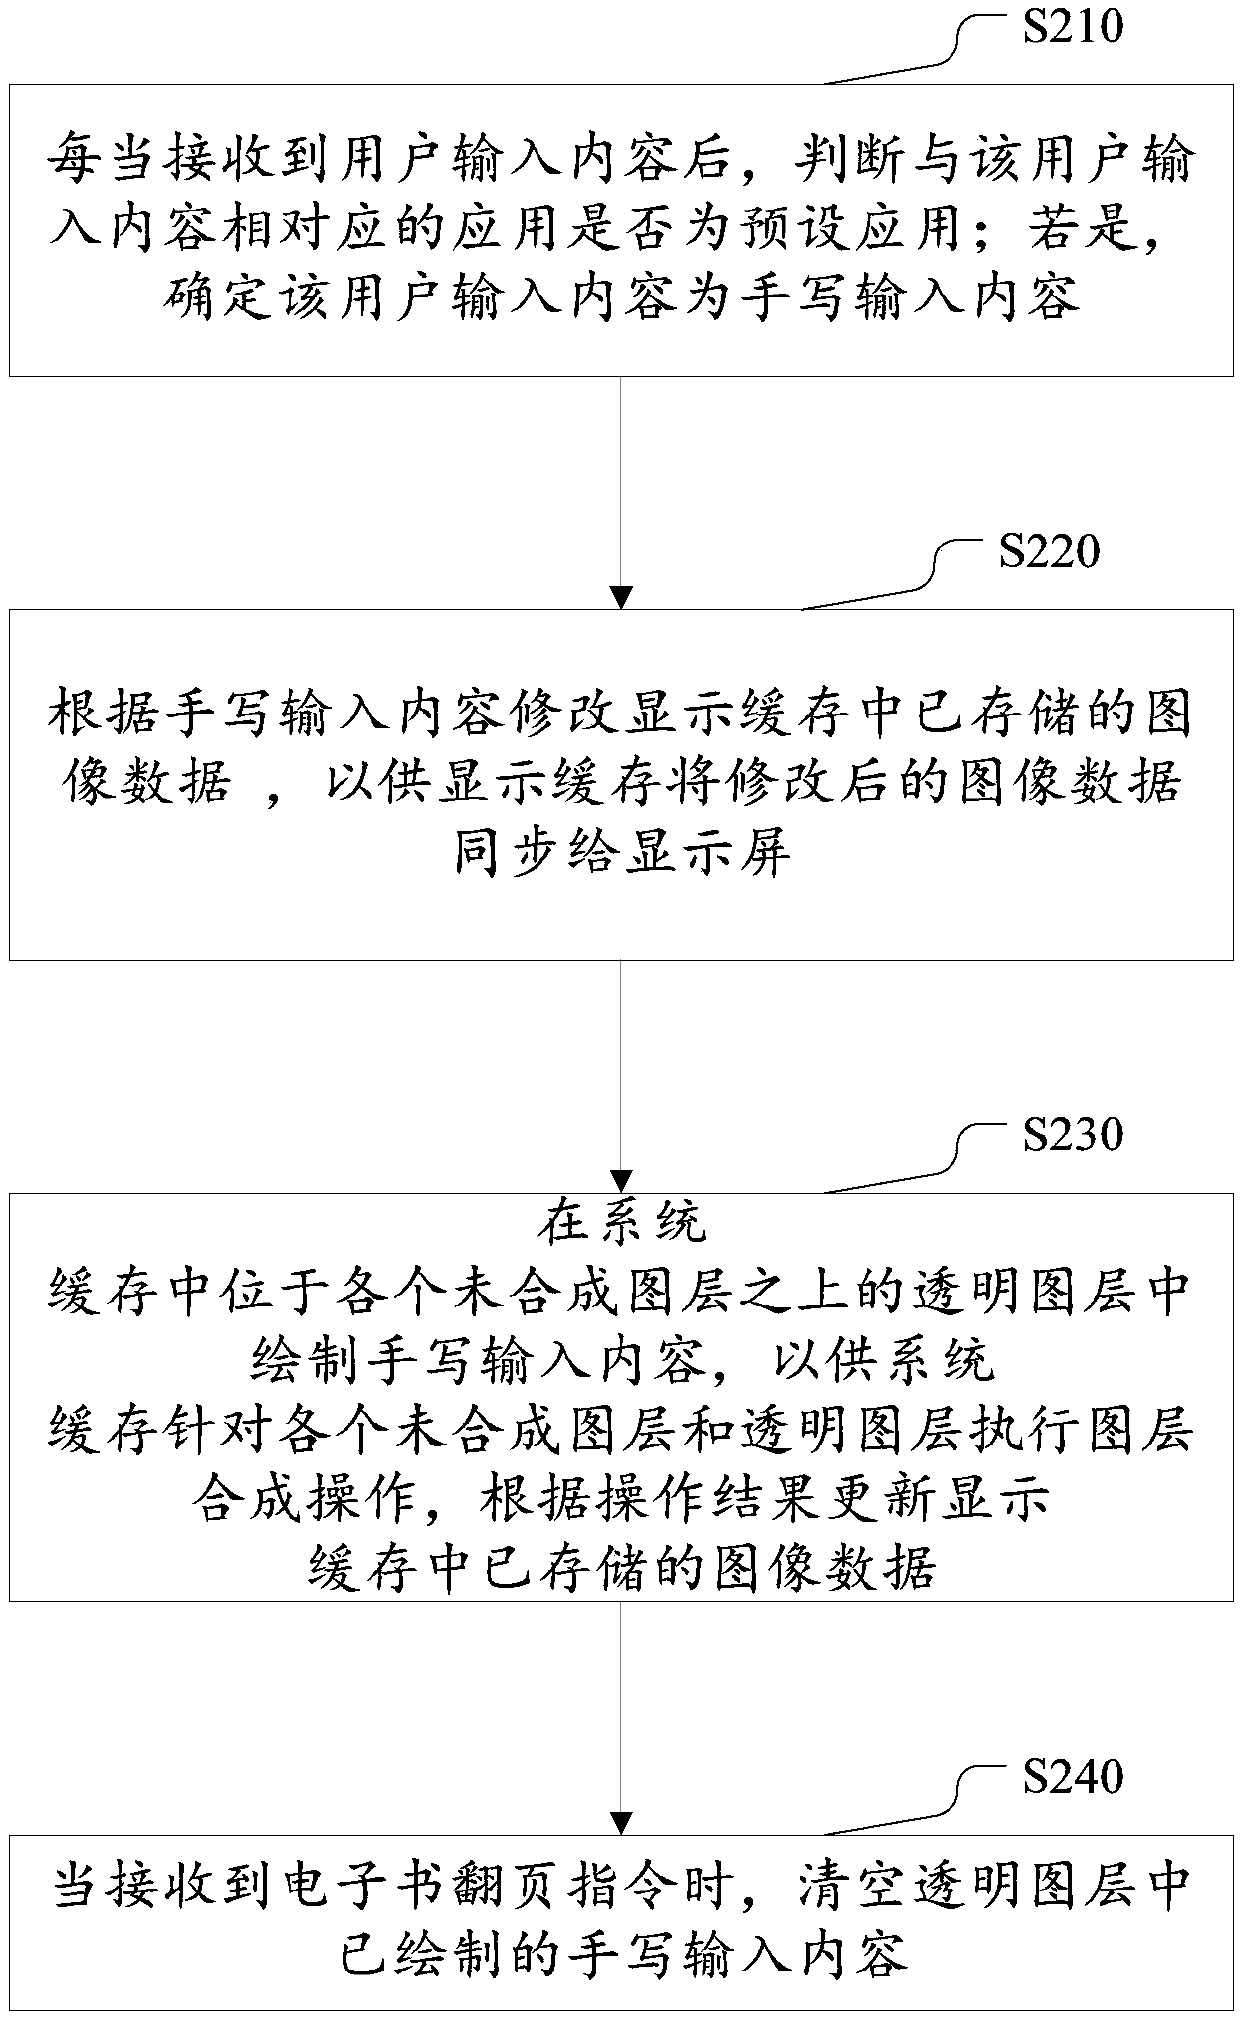 Handwritten input content display method, electronic device and computer storage medium